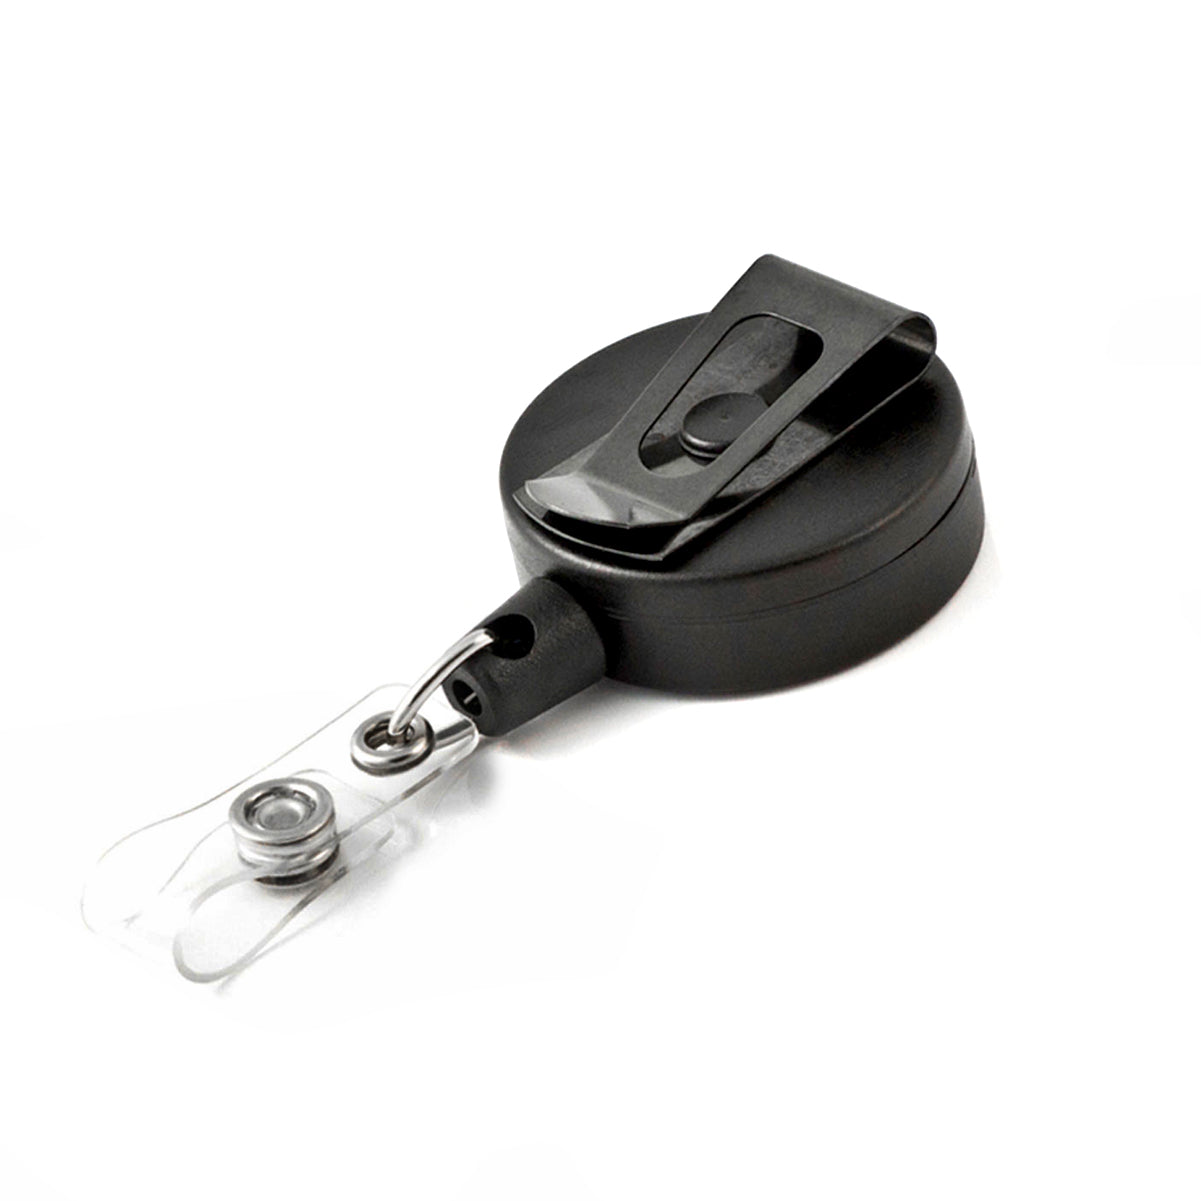 Key-Bak #6ID Mid Size w/ Belt Clip Retractor and more Heavy Duty